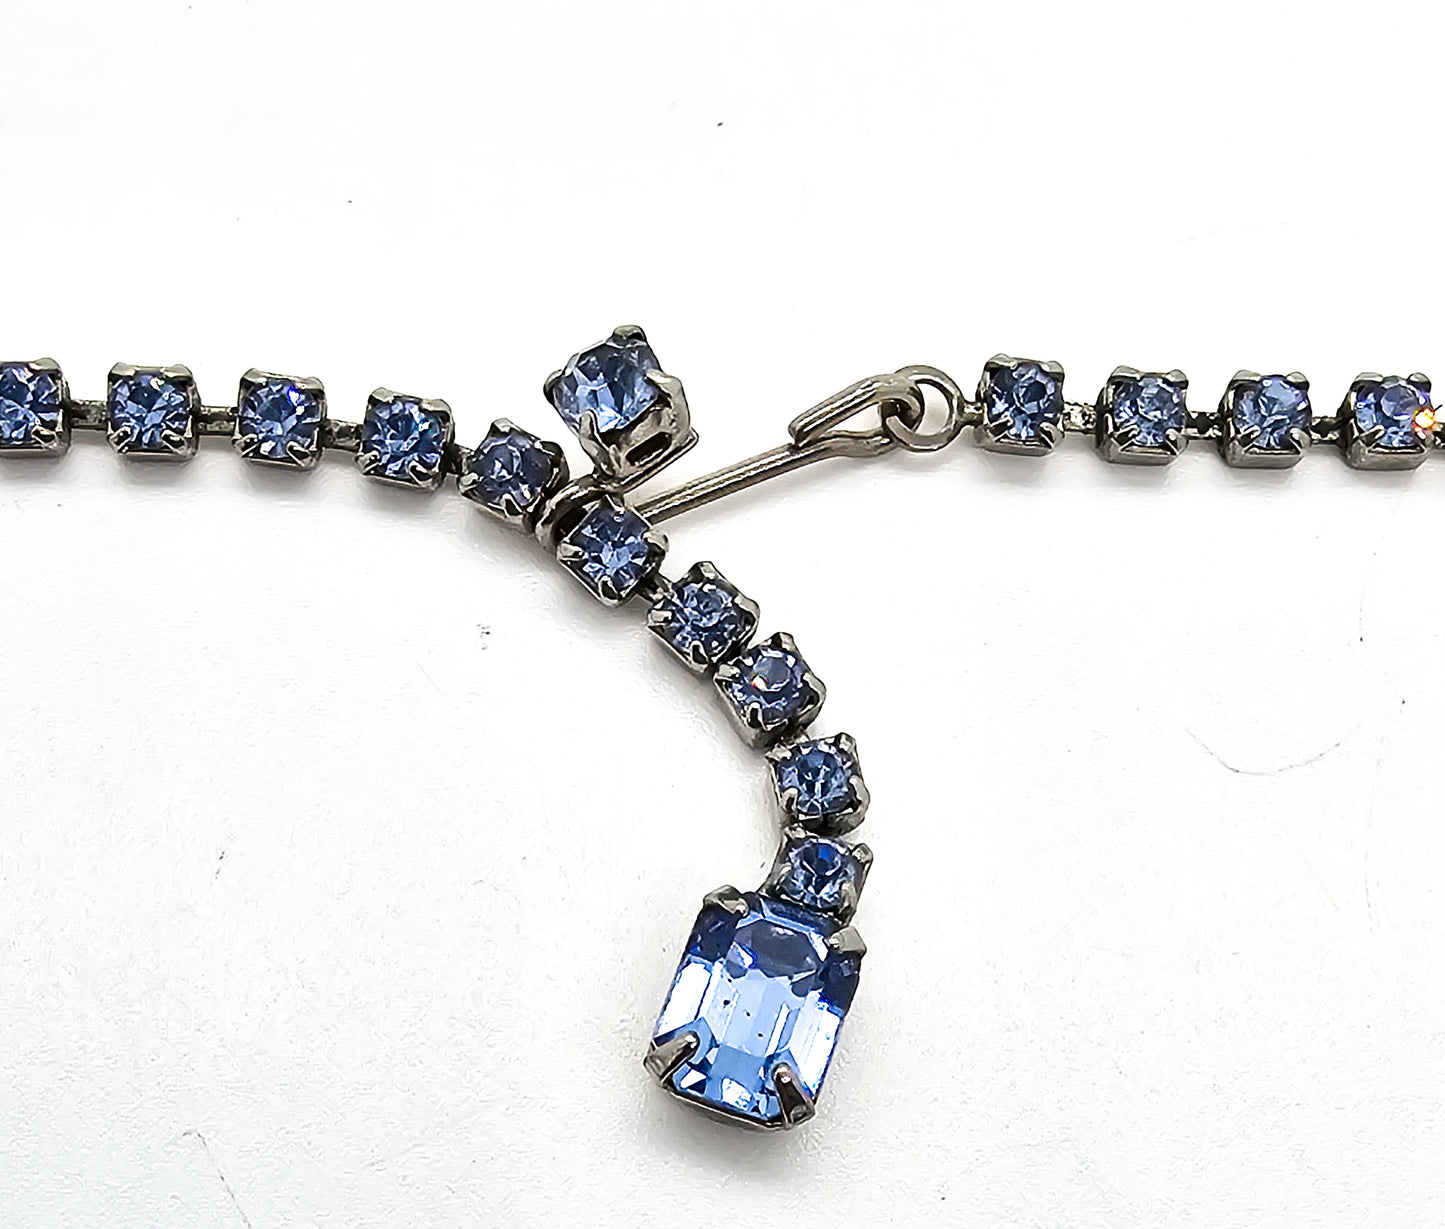 Light blue prong set vintage rhinestone mid century choker necklace